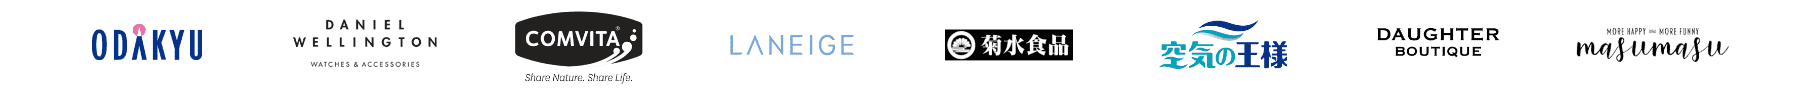 ODAKYU・DANIEL WELLINGTON・COMVIA・LANEIGE・菊水食品・空気の王様・DAUGHTER・magumaguのロゴ